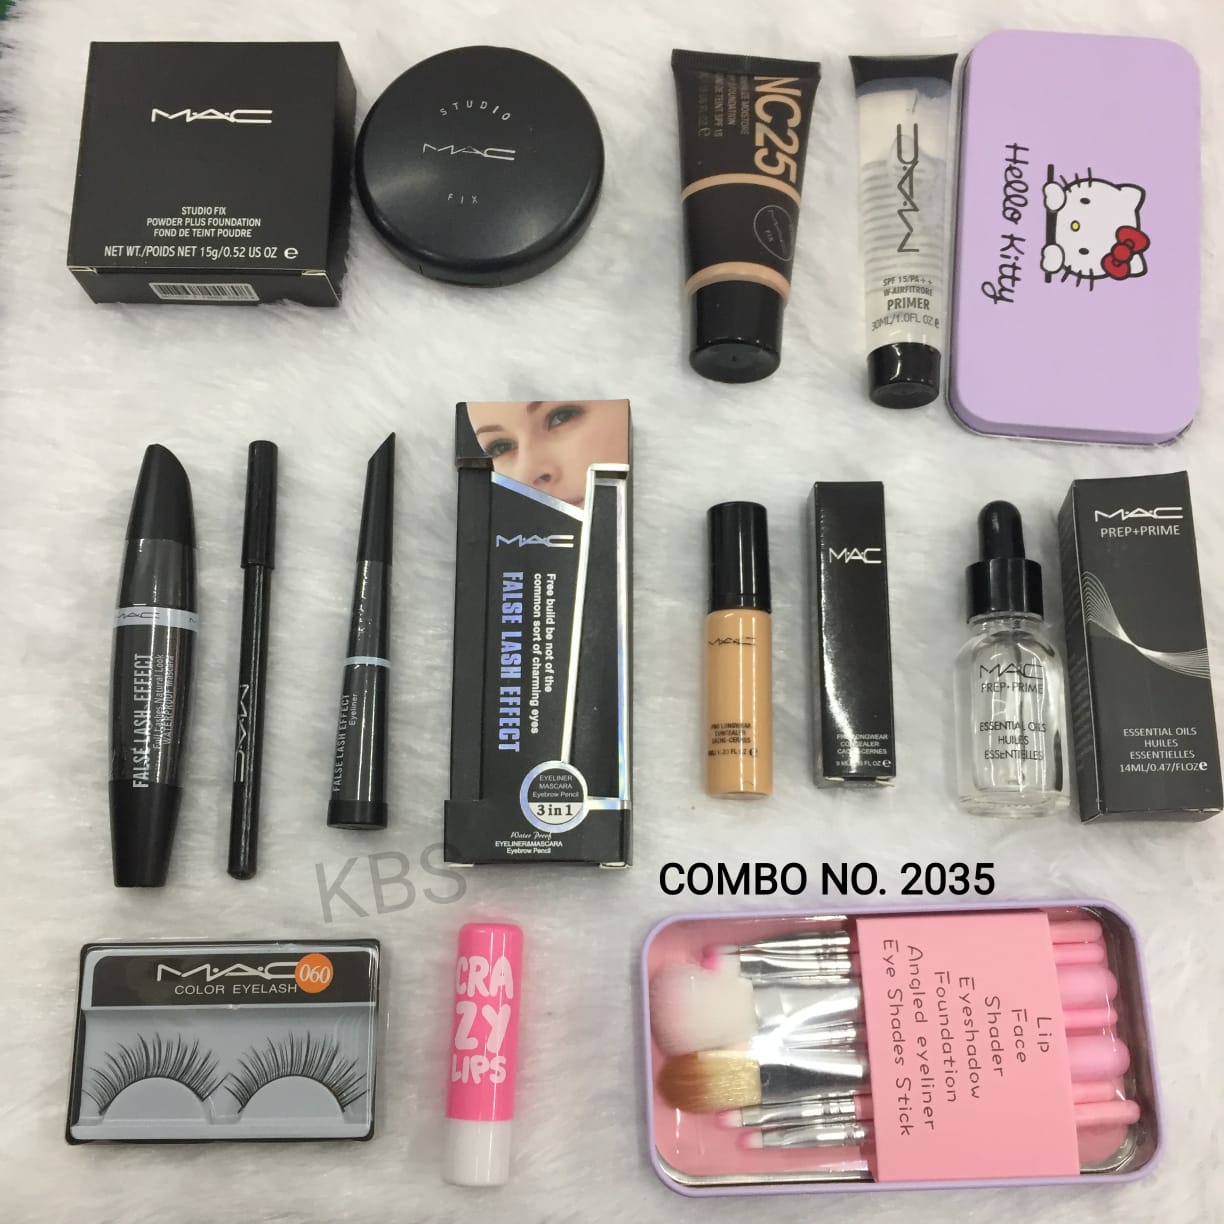  Makeup Glamour Kit Combo Pack